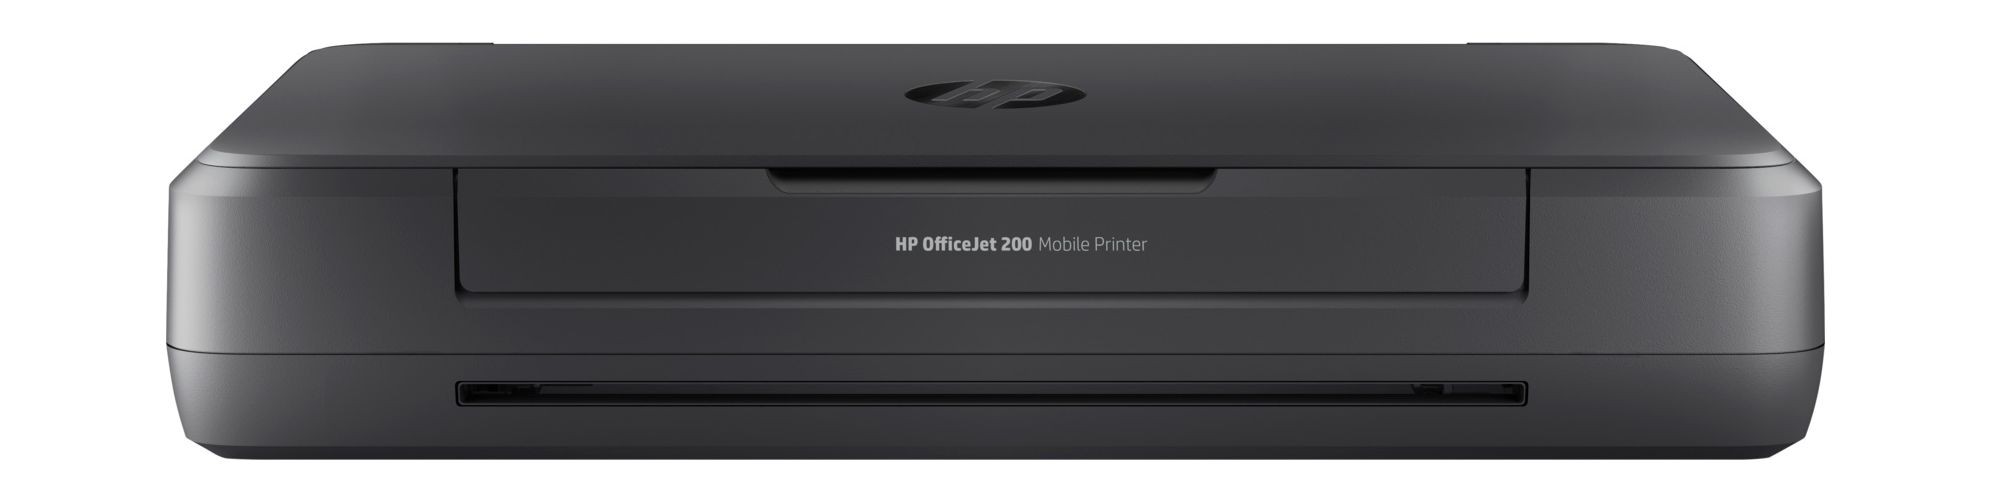 Hp Officejet 200 Mobile Series Printer Driver - Amazon Com Hp Officejet